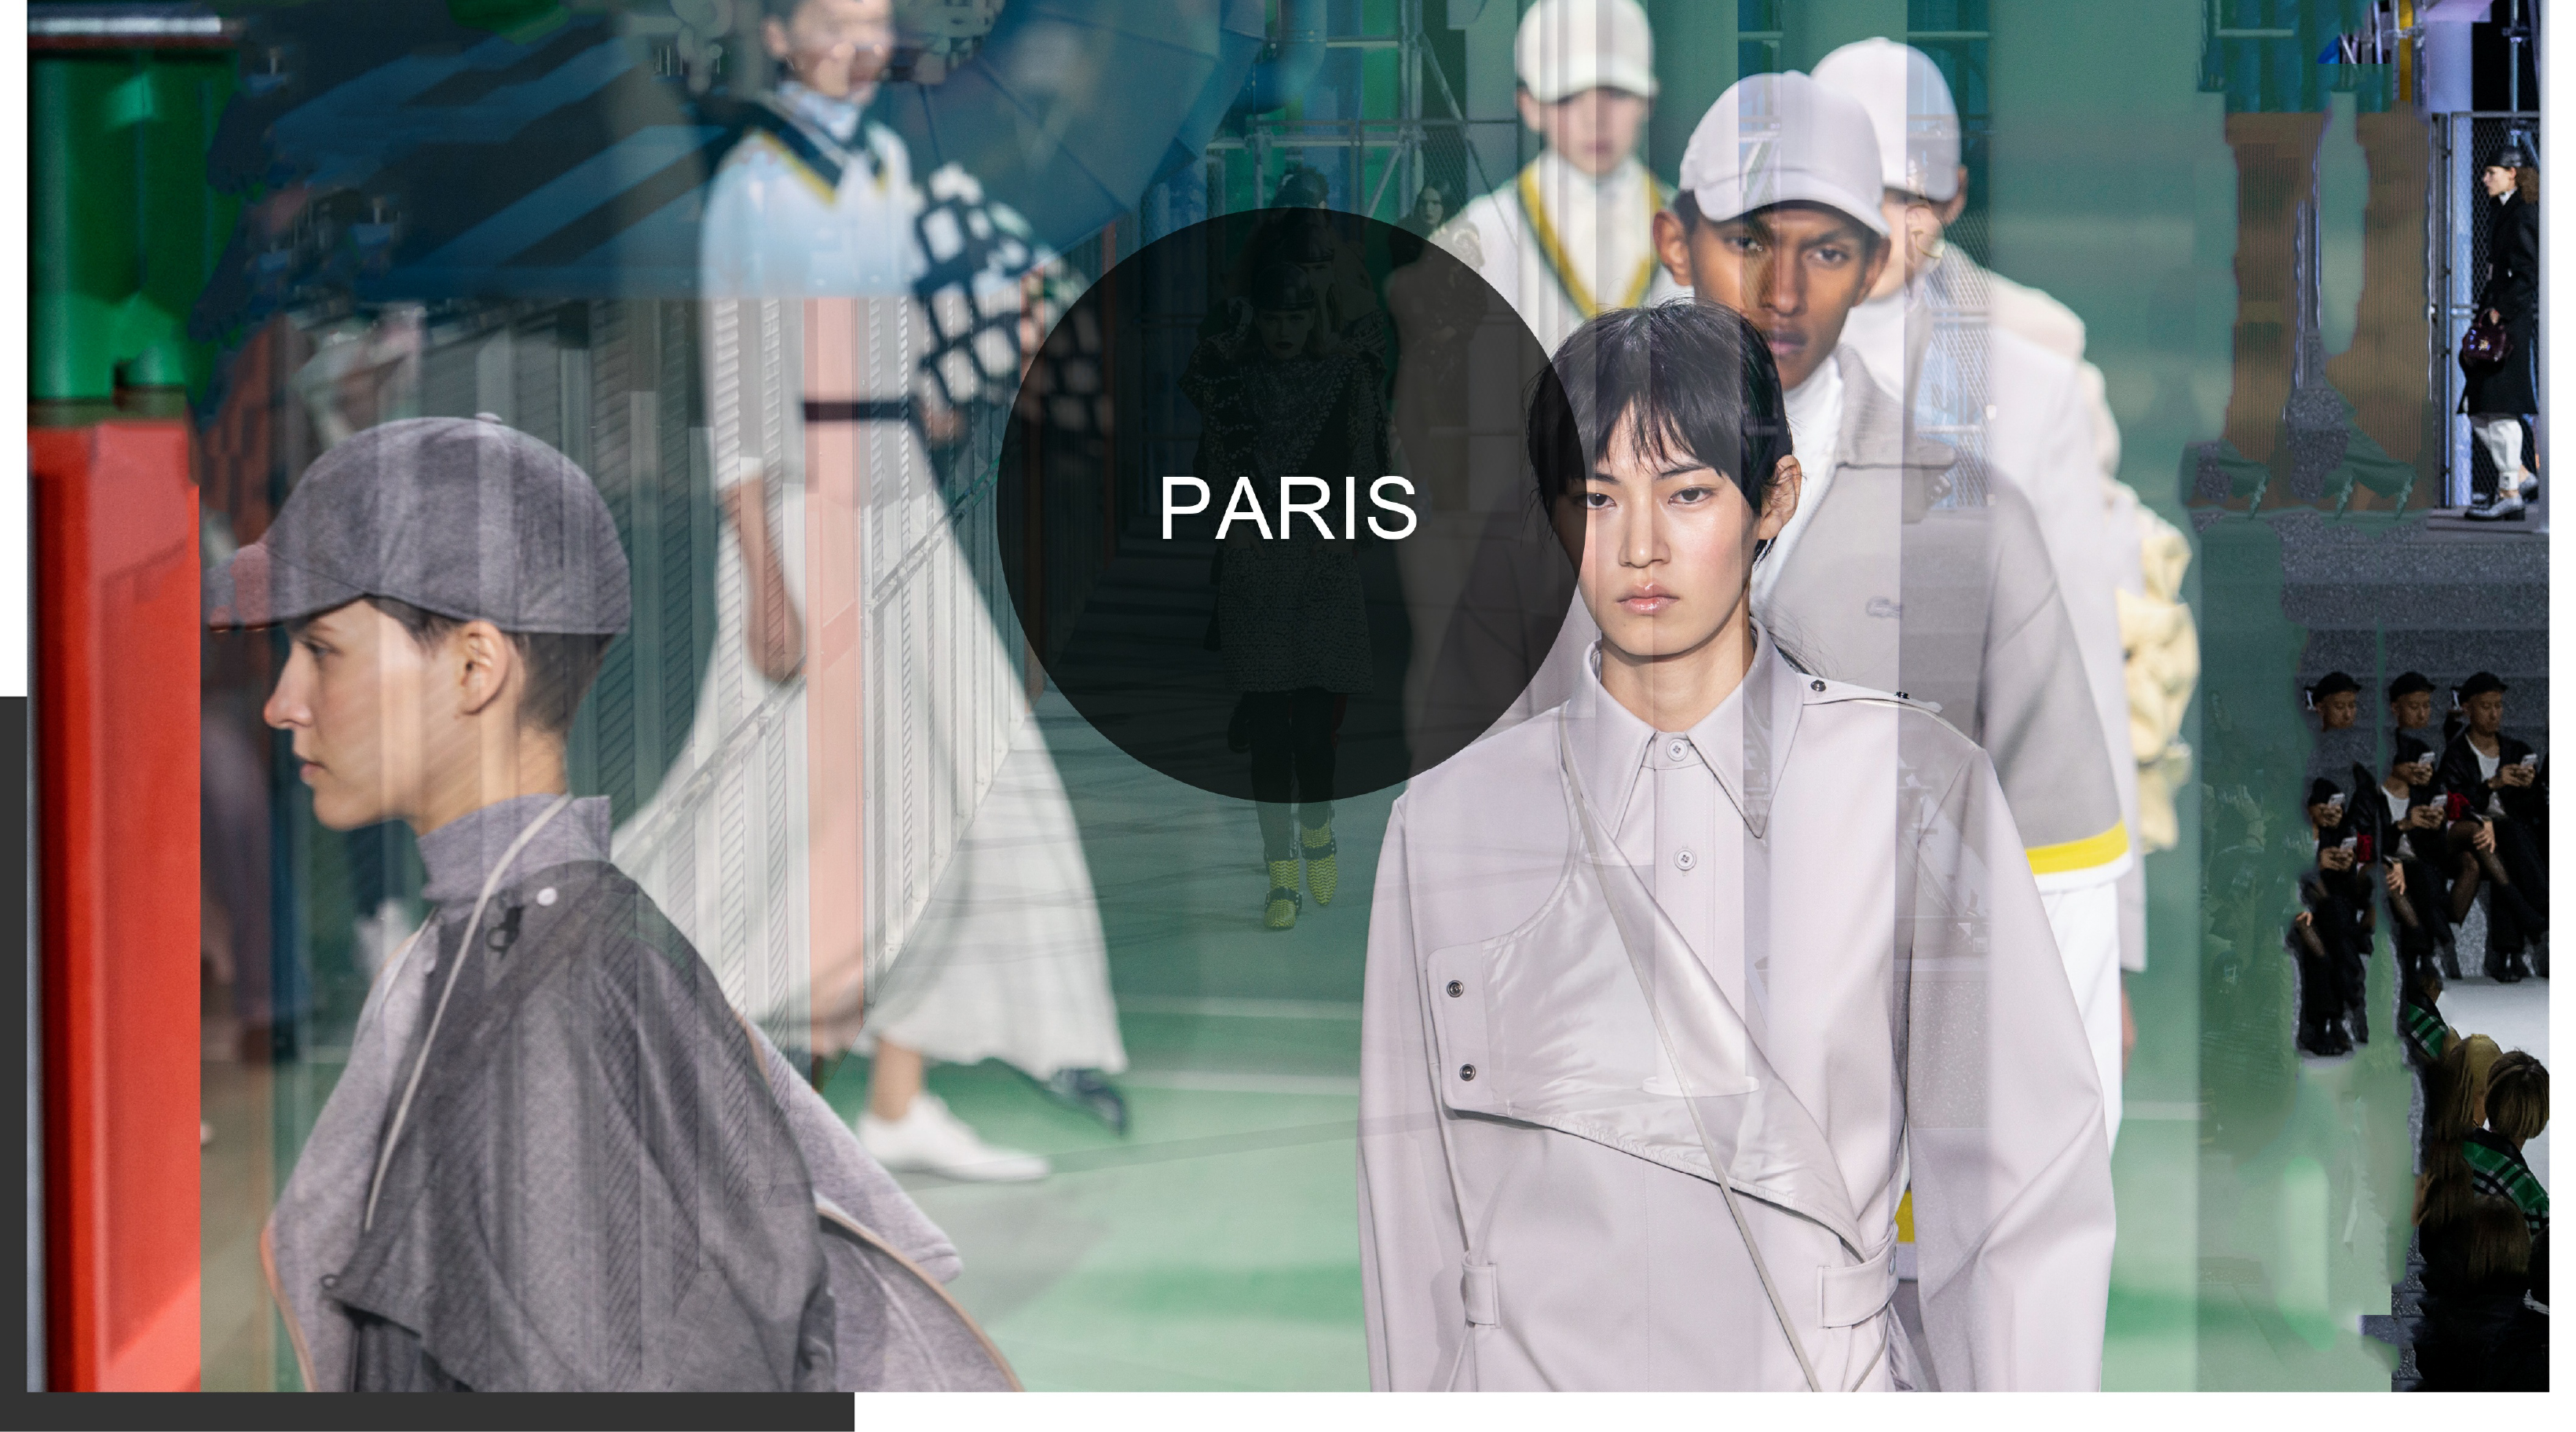 Paris Again -- A/W 19/20 Analysis of Catwalks for Womenswear